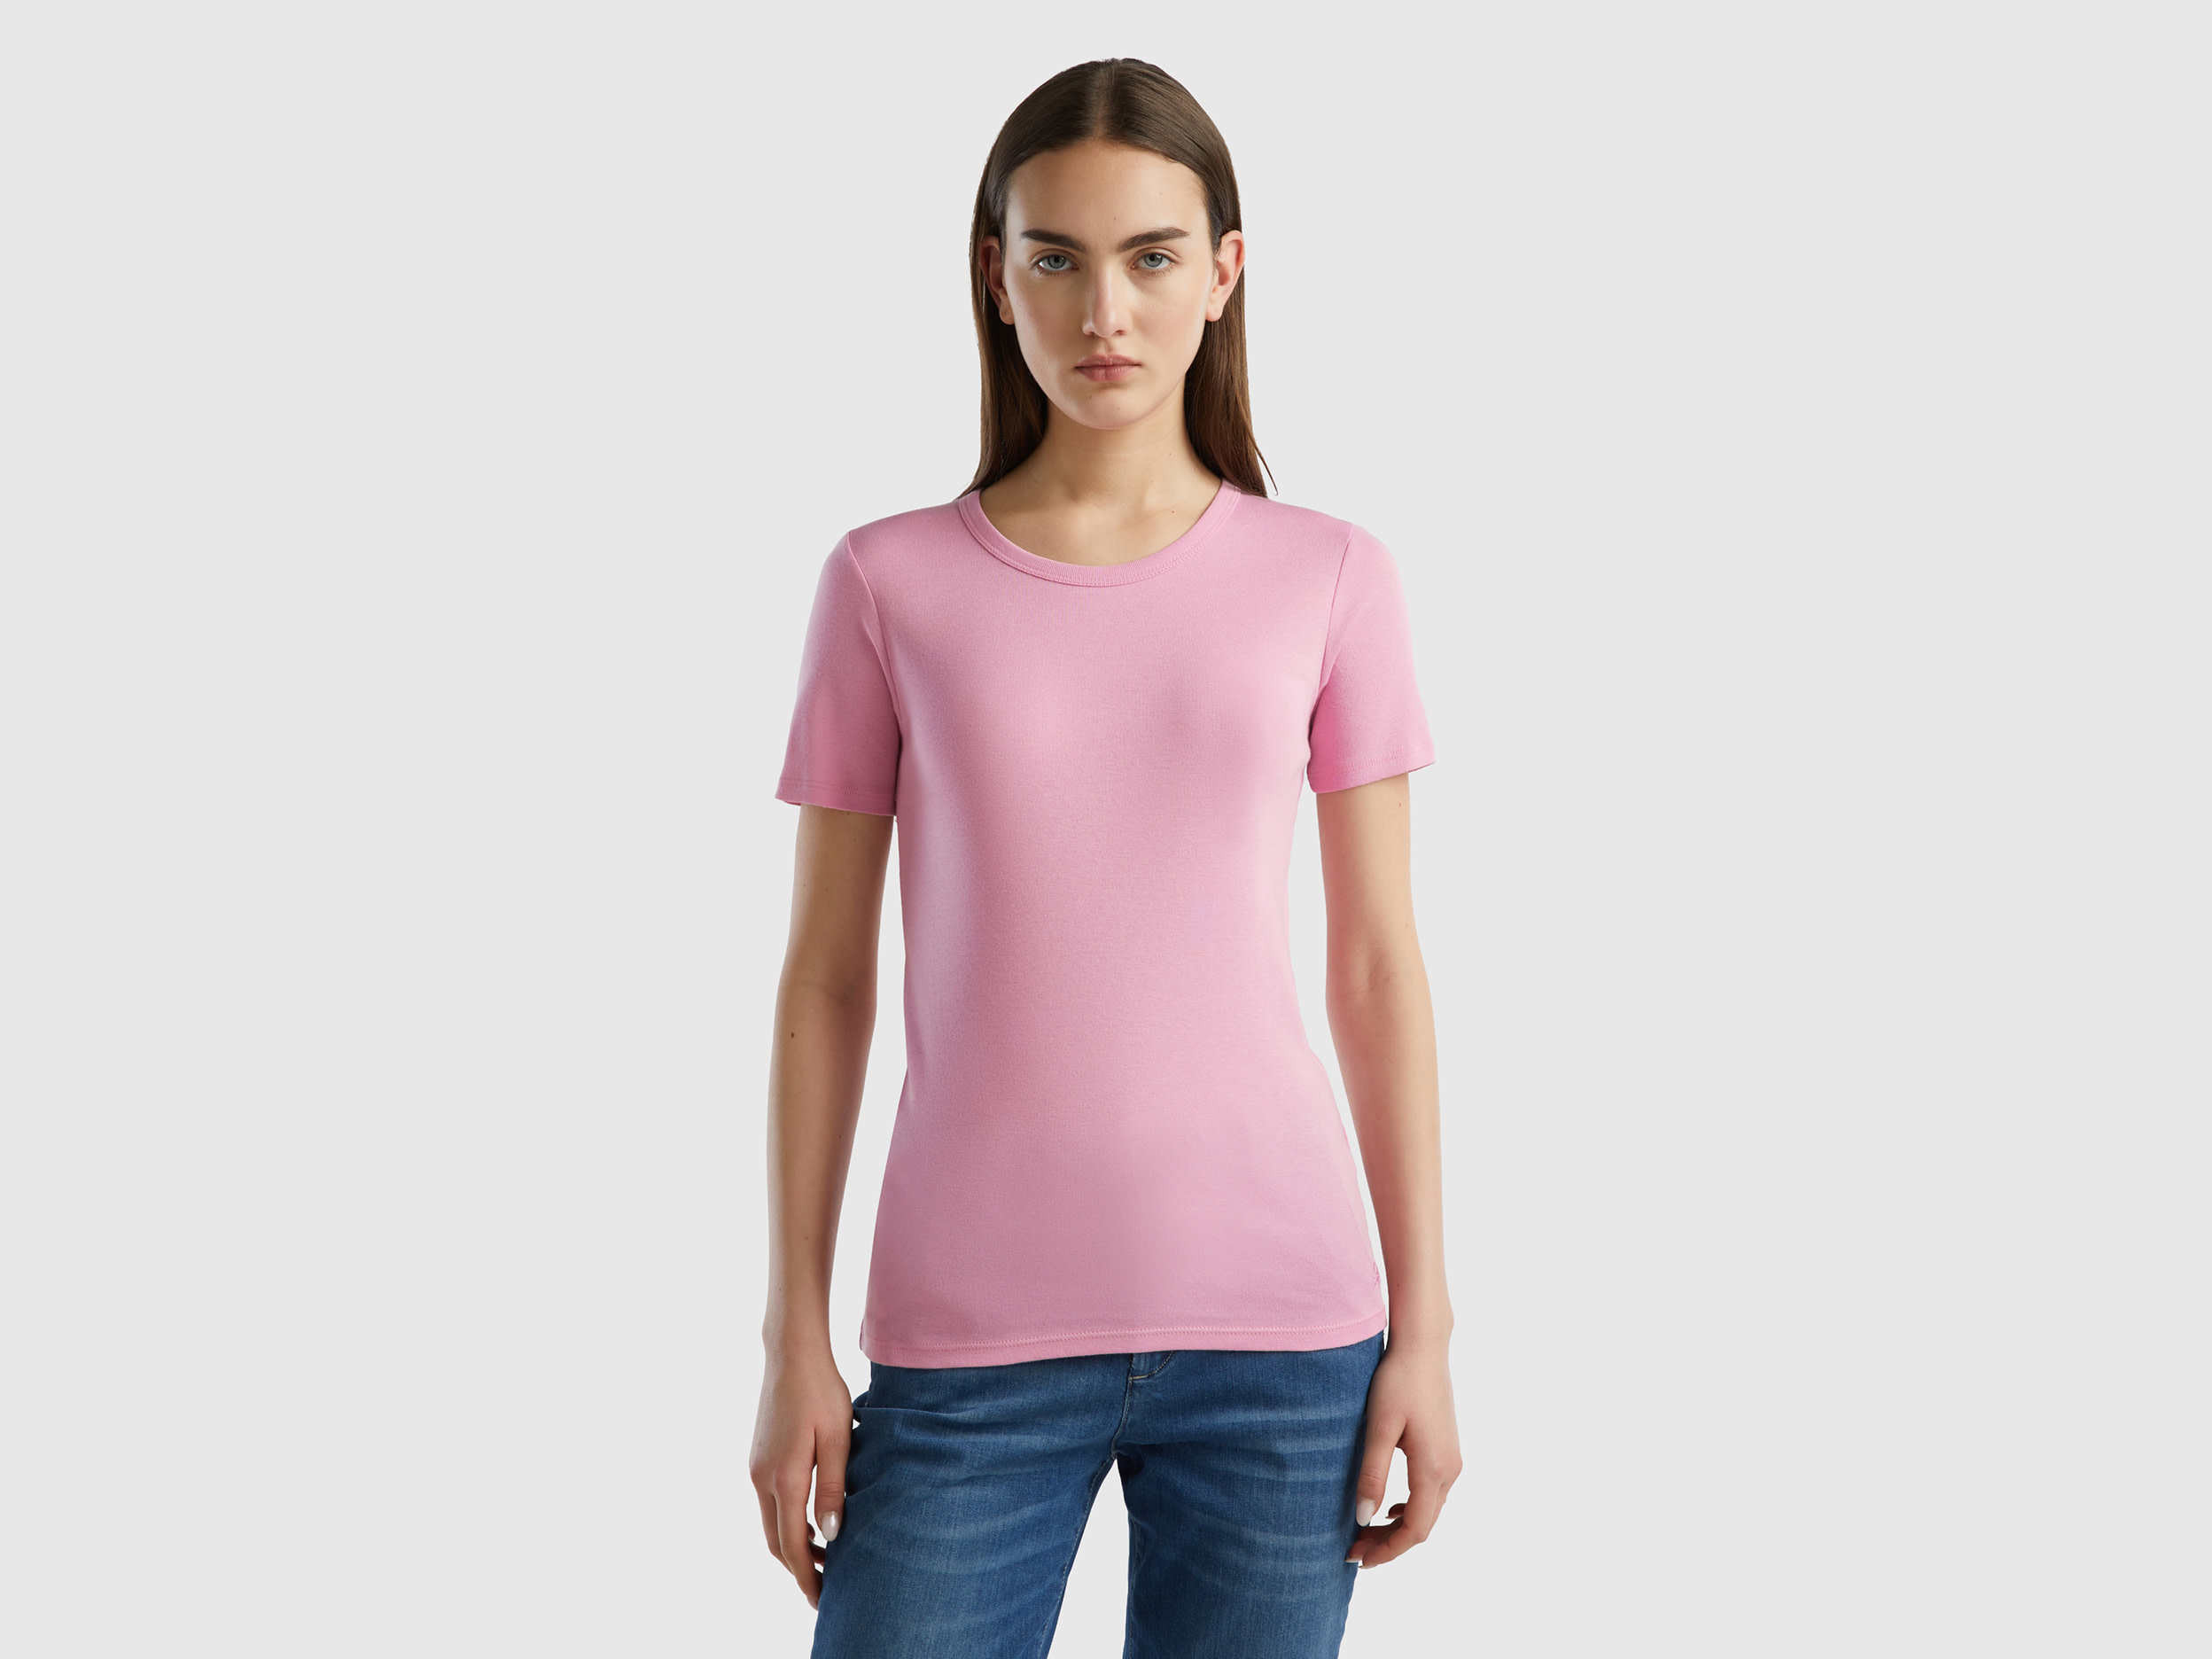 Benetton, Long Fiber Cotton T-shirt, size L, Pastel Pink, Women